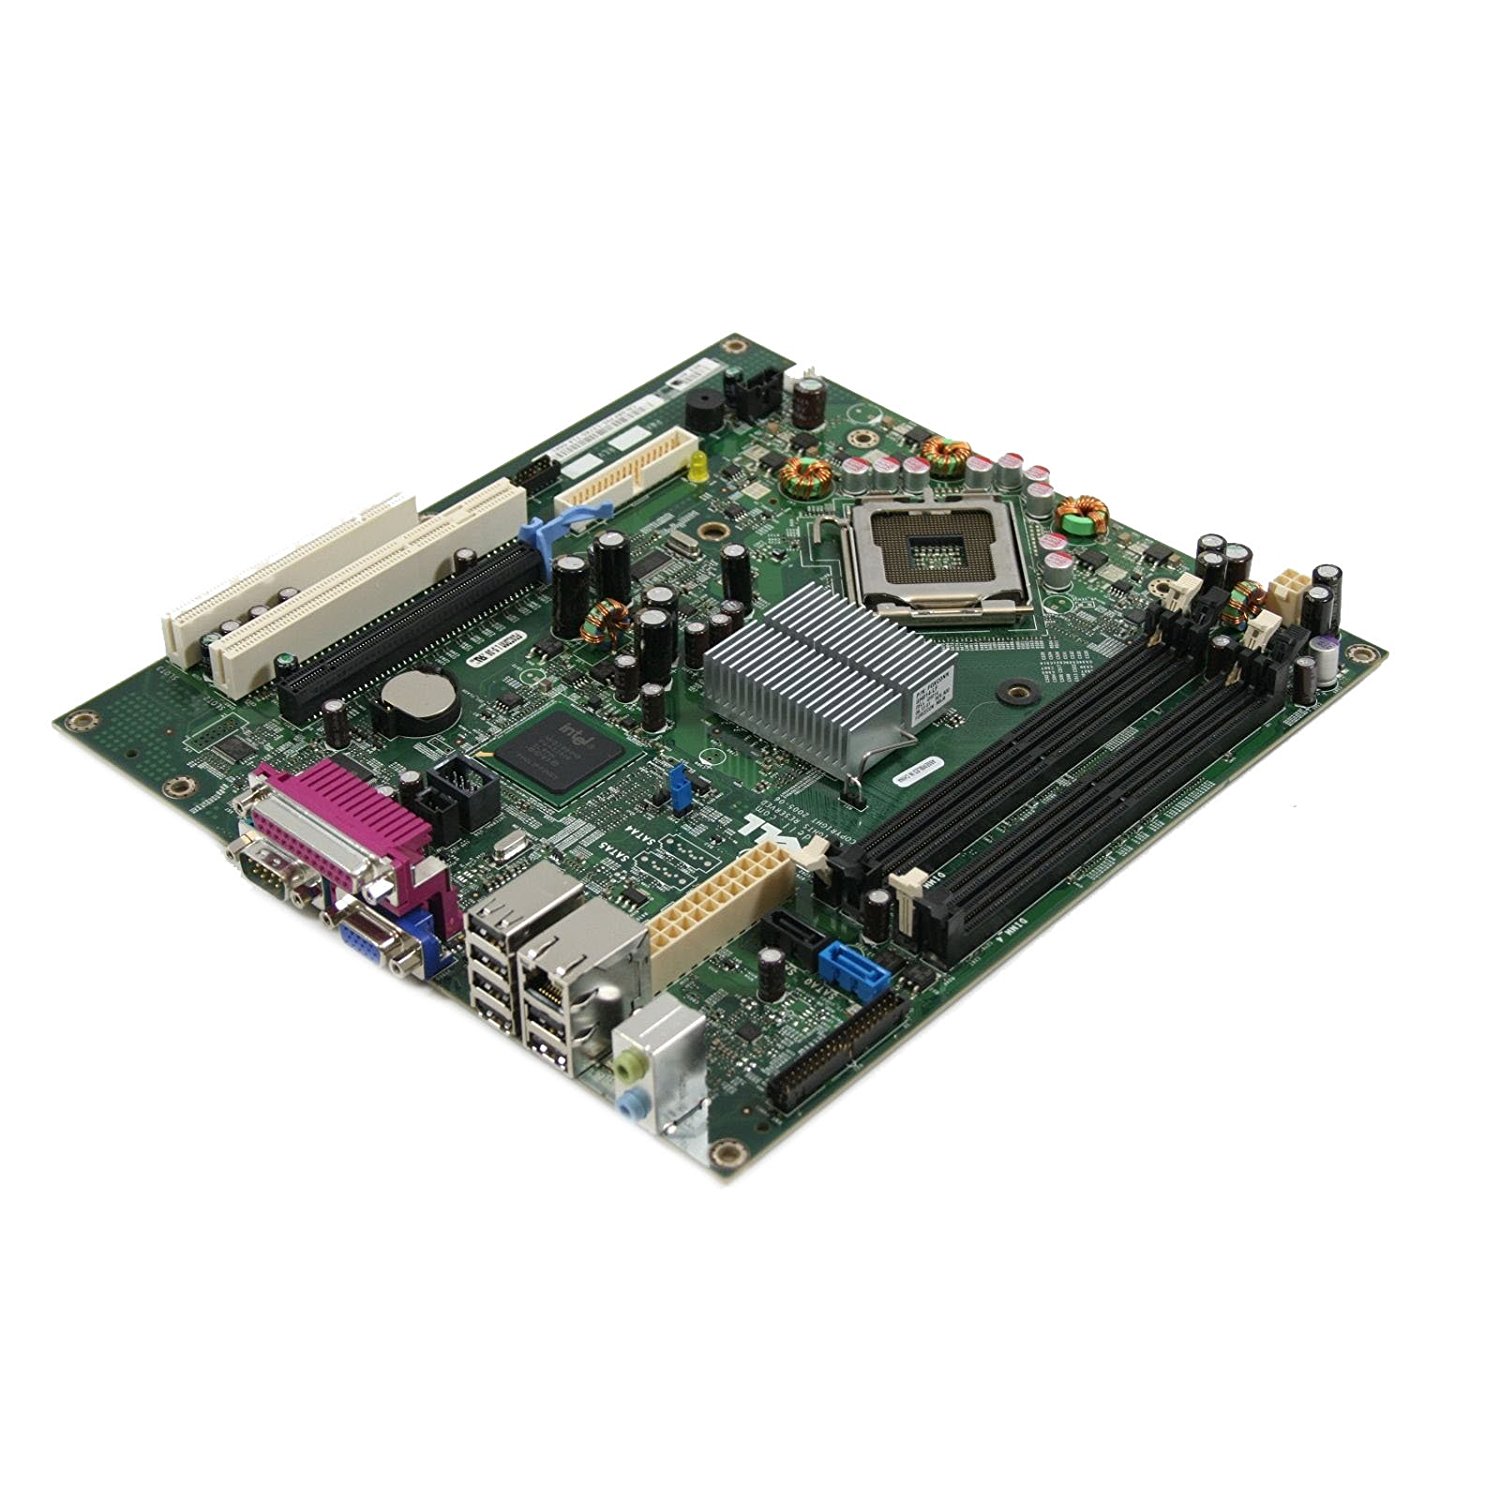 Dell HP962 Motherboard for Optiplex GX745 Standard Desktop Sd Model